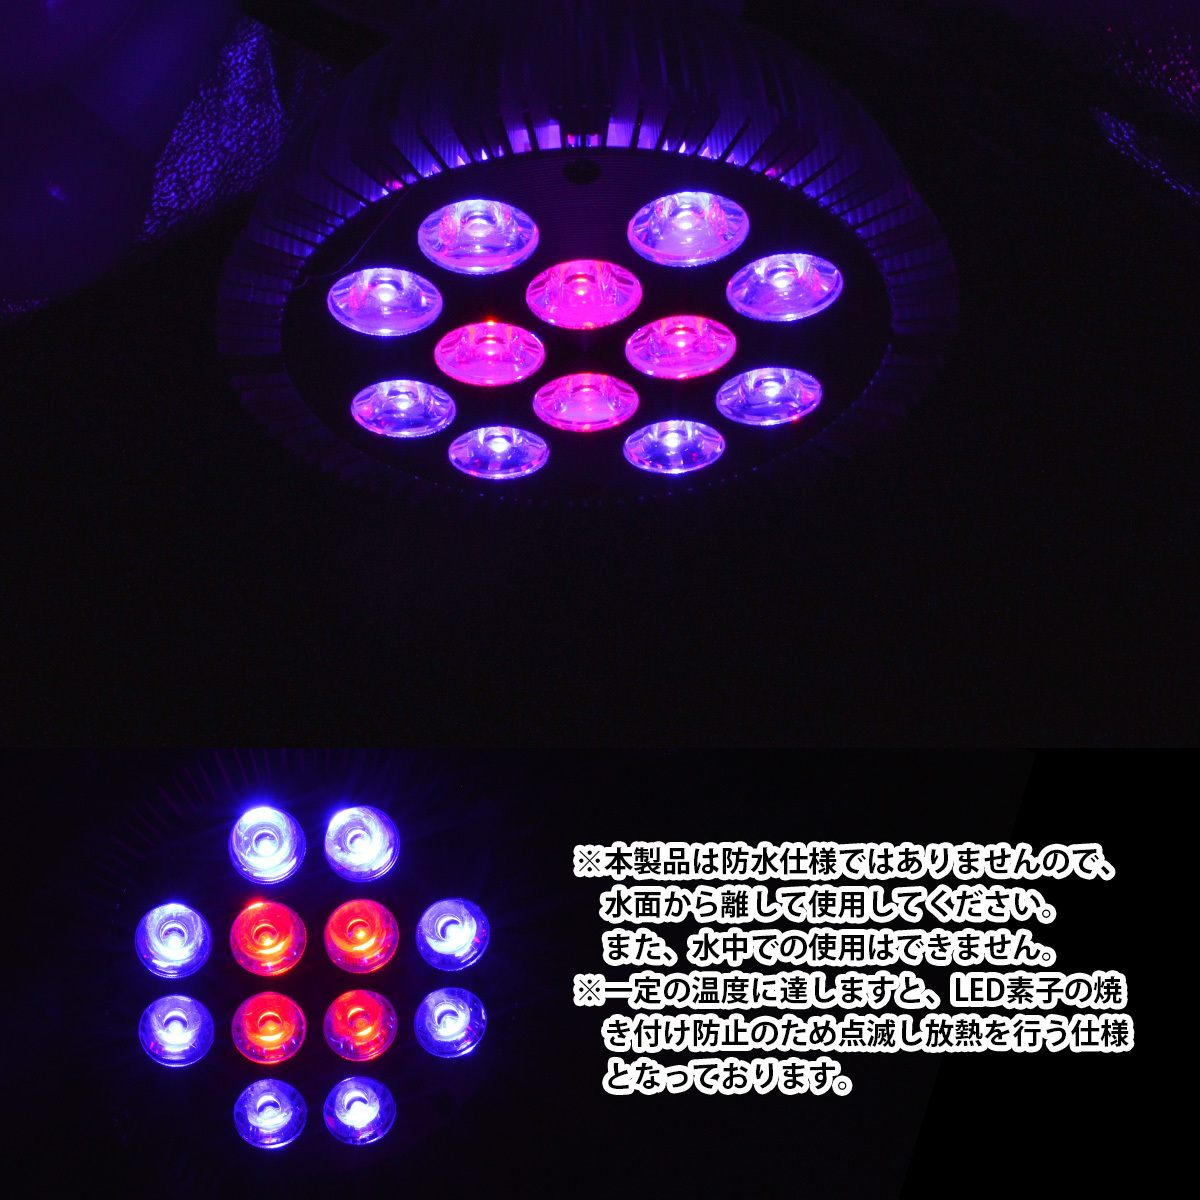 LED 電球 スポットライト 24W(2W×12)青8赤4 水槽 照明 E26 水草 LEDスポットライト 電気 水草 サンゴ 熱帯魚 観賞魚 植物育成_画像4